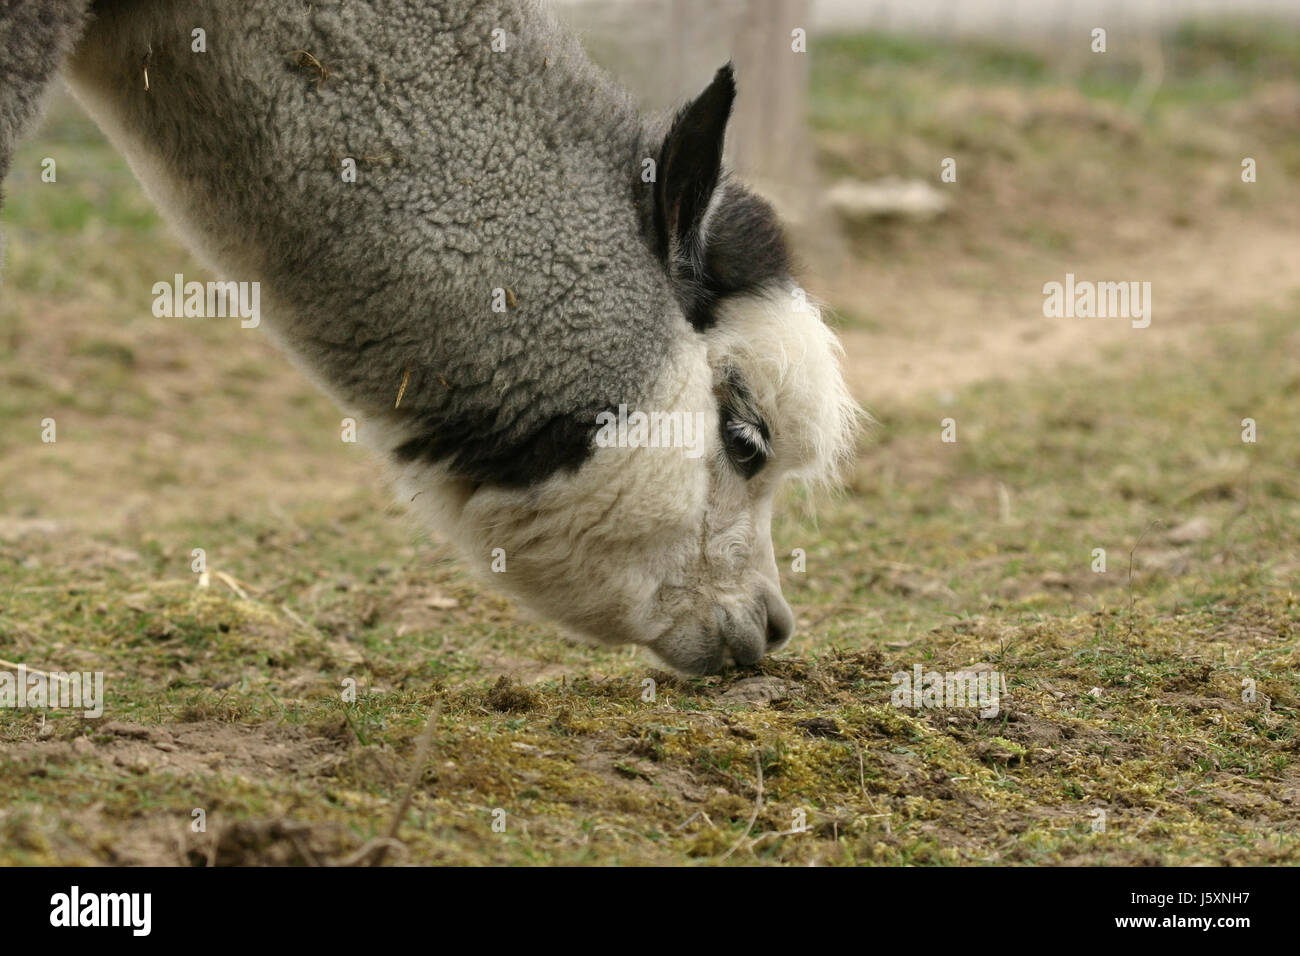 animal south america farm animal alpaca llama animal black swarthy jetblack Stock Photo